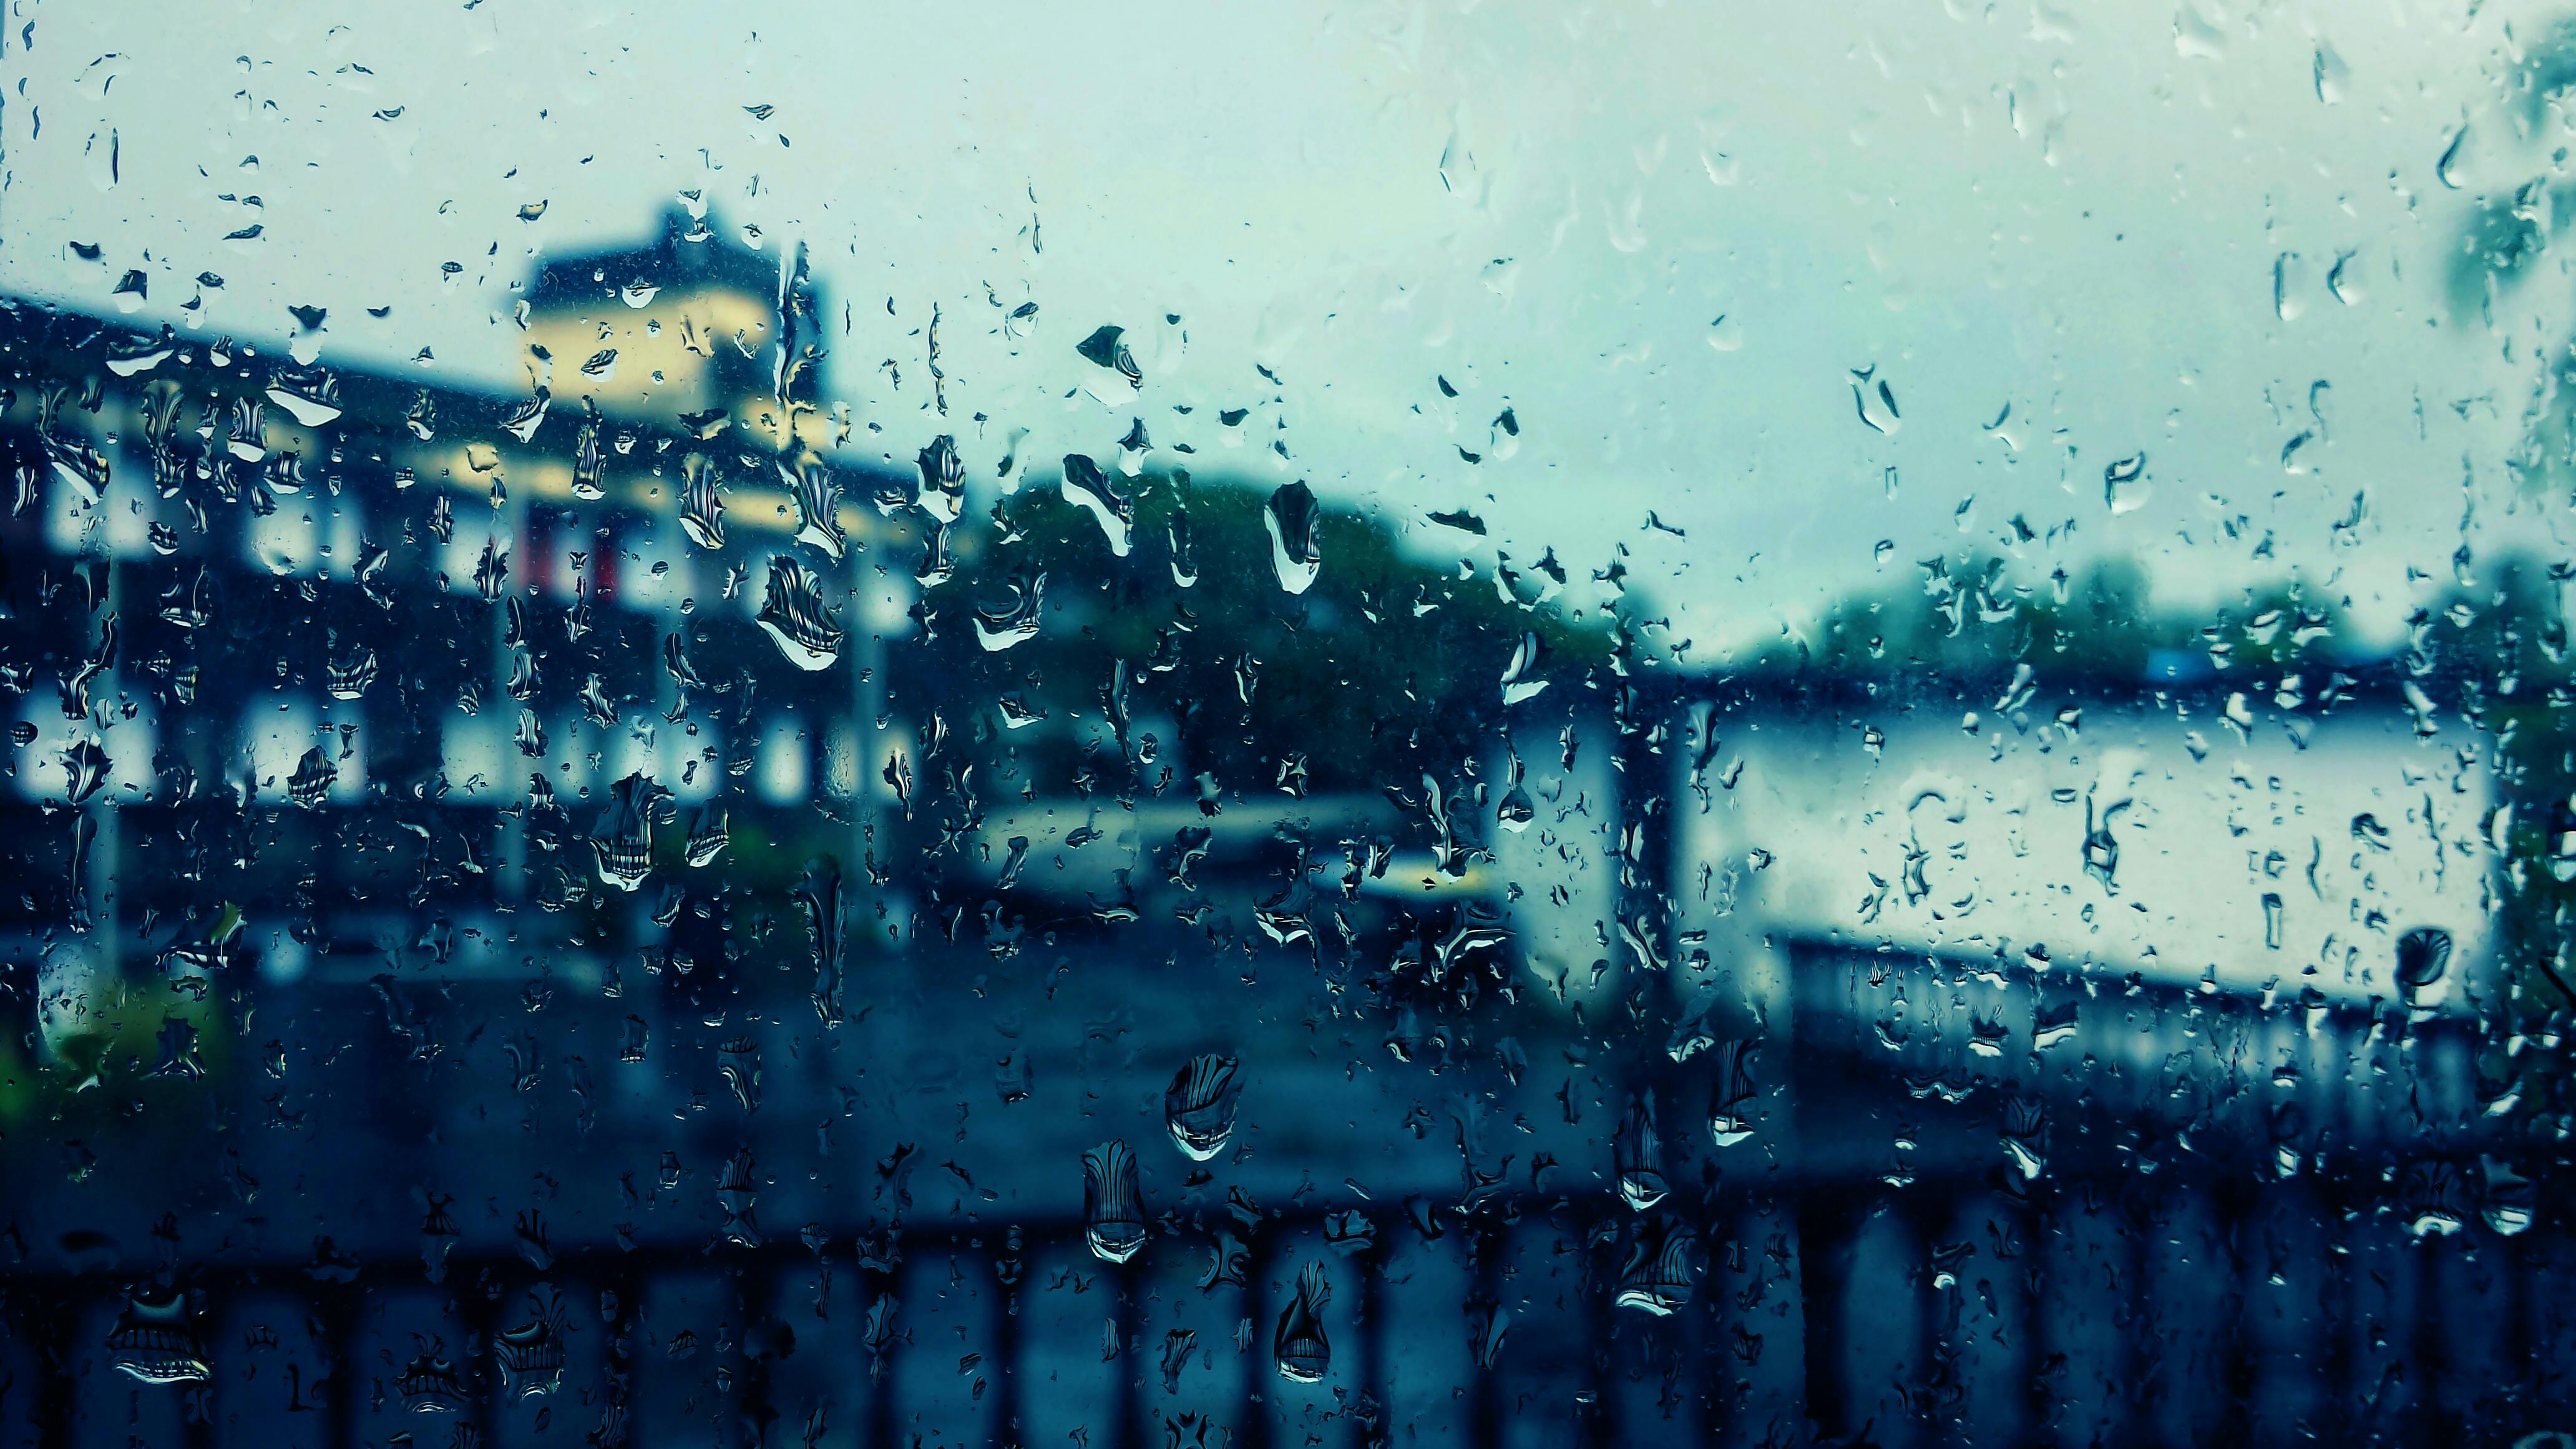 Rain On Window Photos, Download The BEST Free Rain On Window Stock Photos &  HD Images